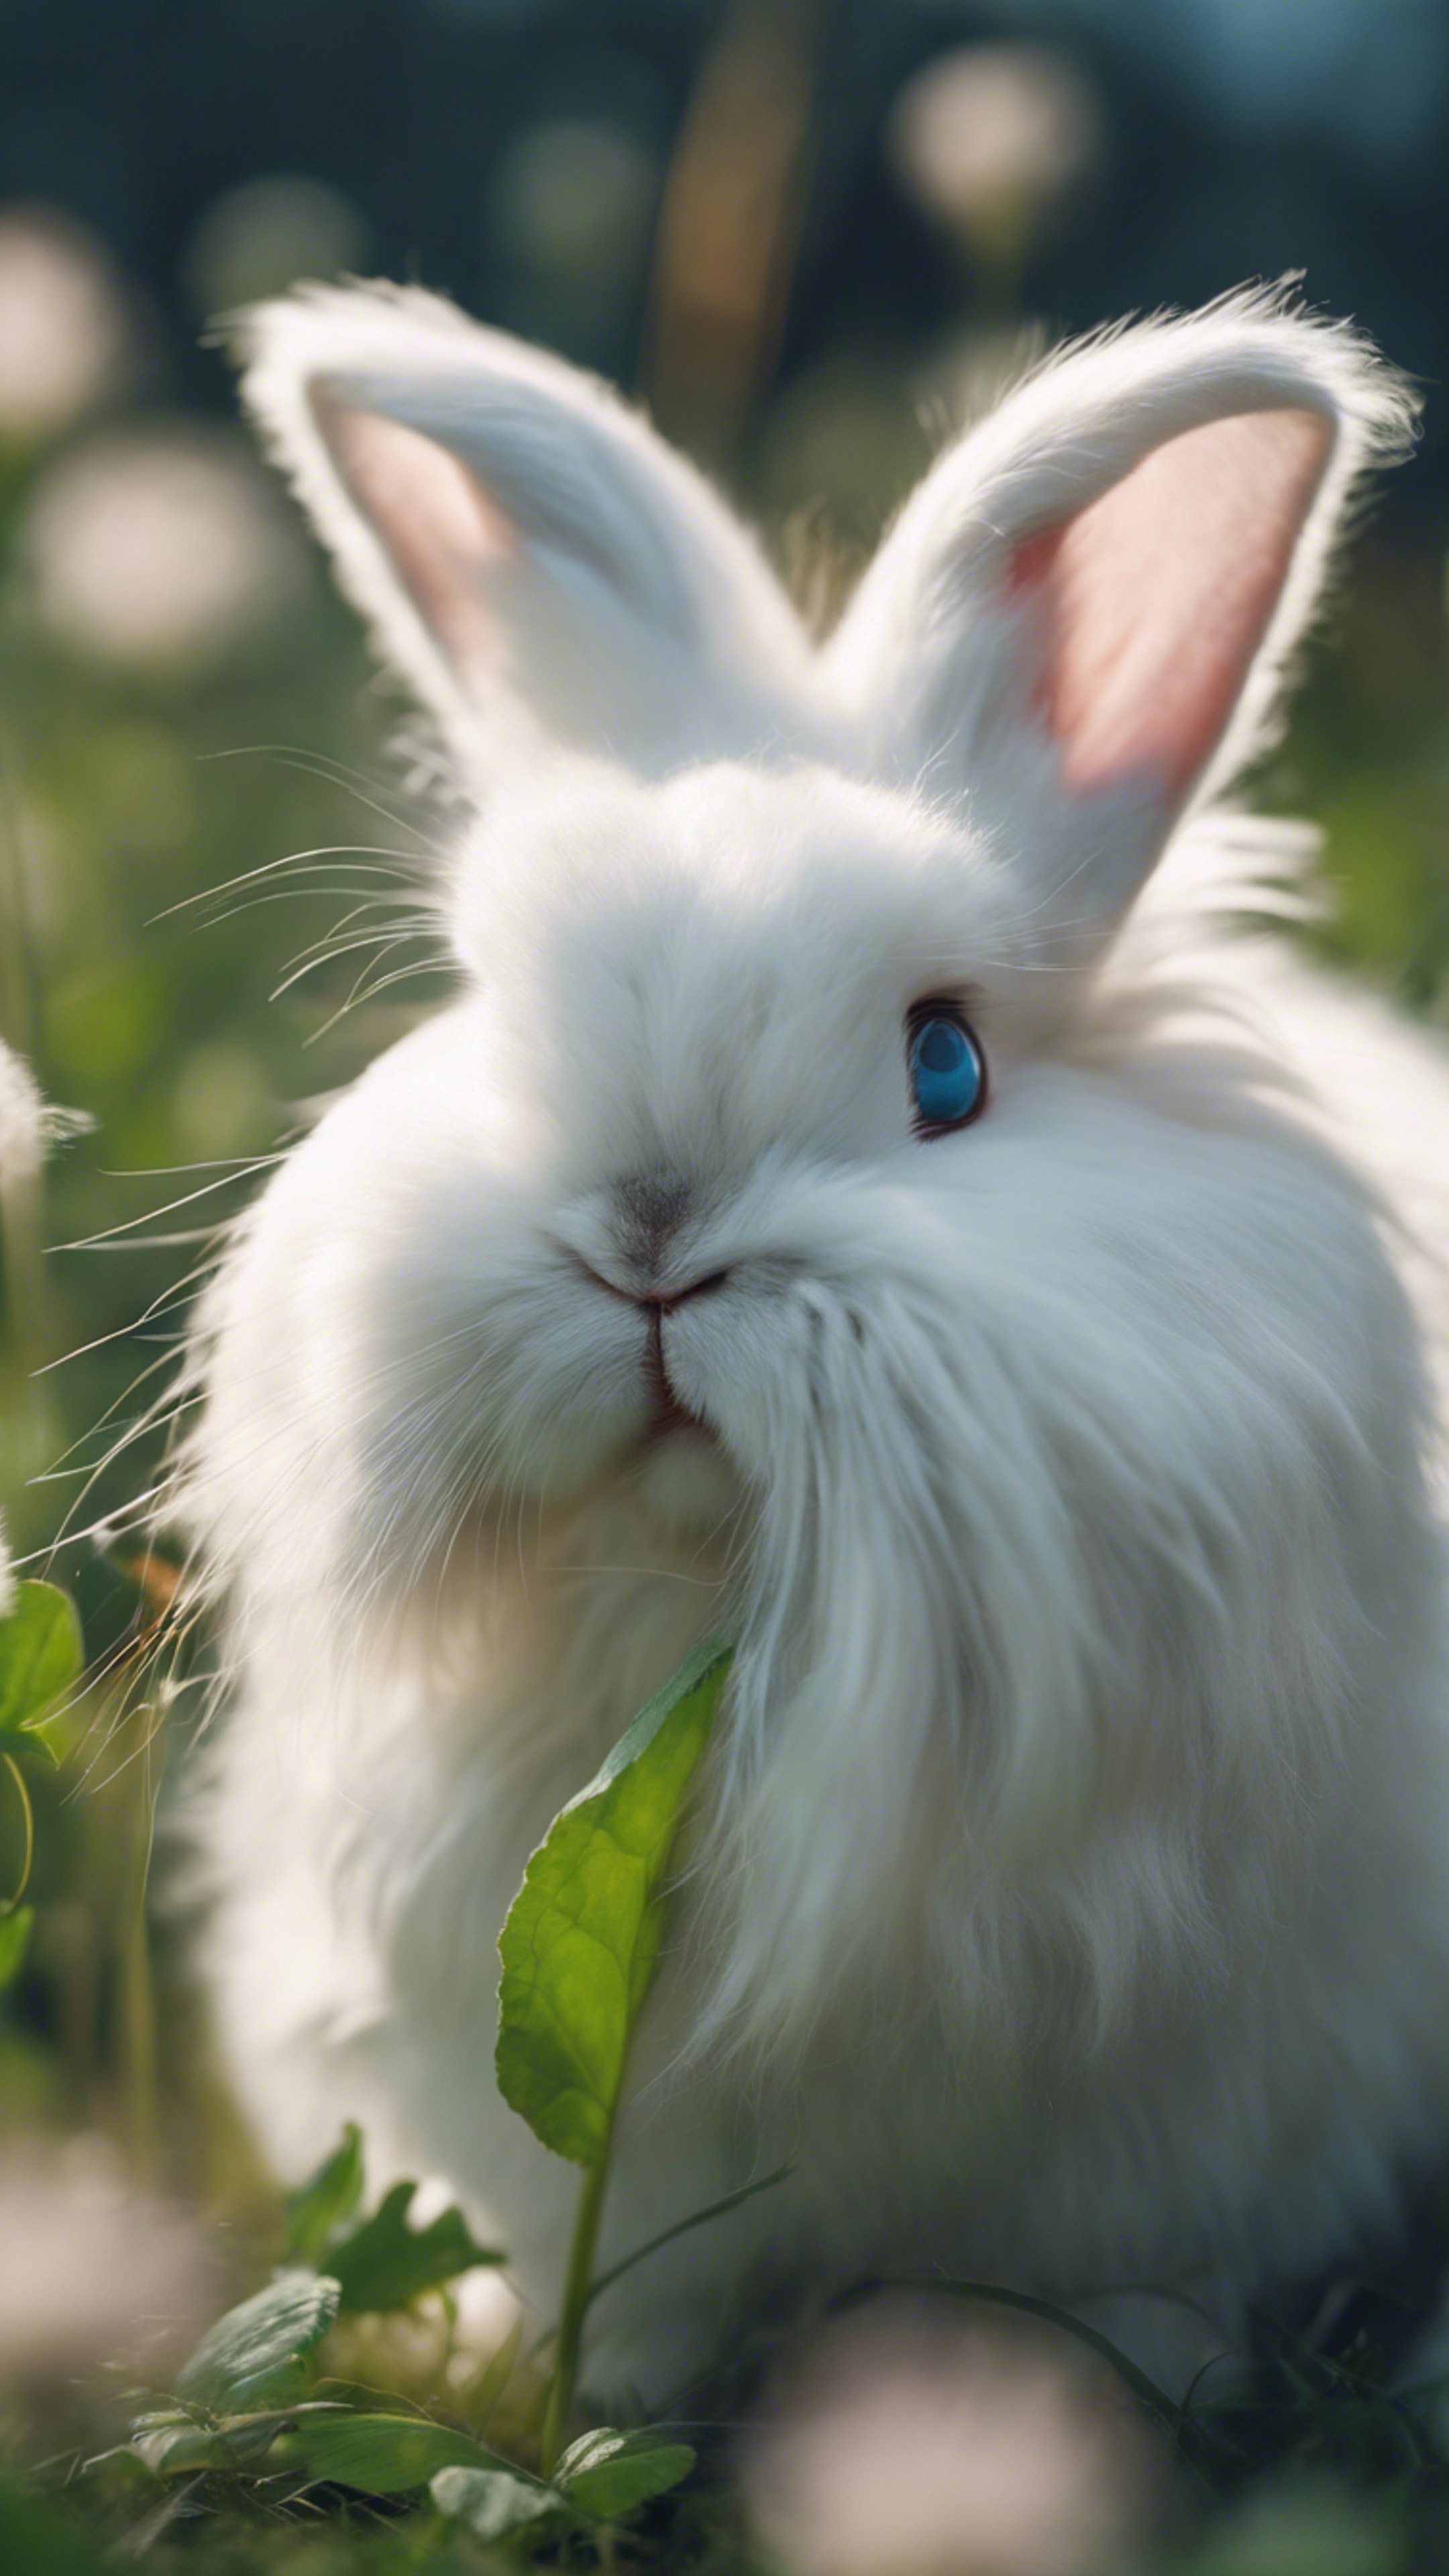 A fluffy angora rabbit with big blue eyes, nestled snugly in a patch of clover. ផ្ទាំង​រូបភាព[a1edfdea4e4b4864b66c]